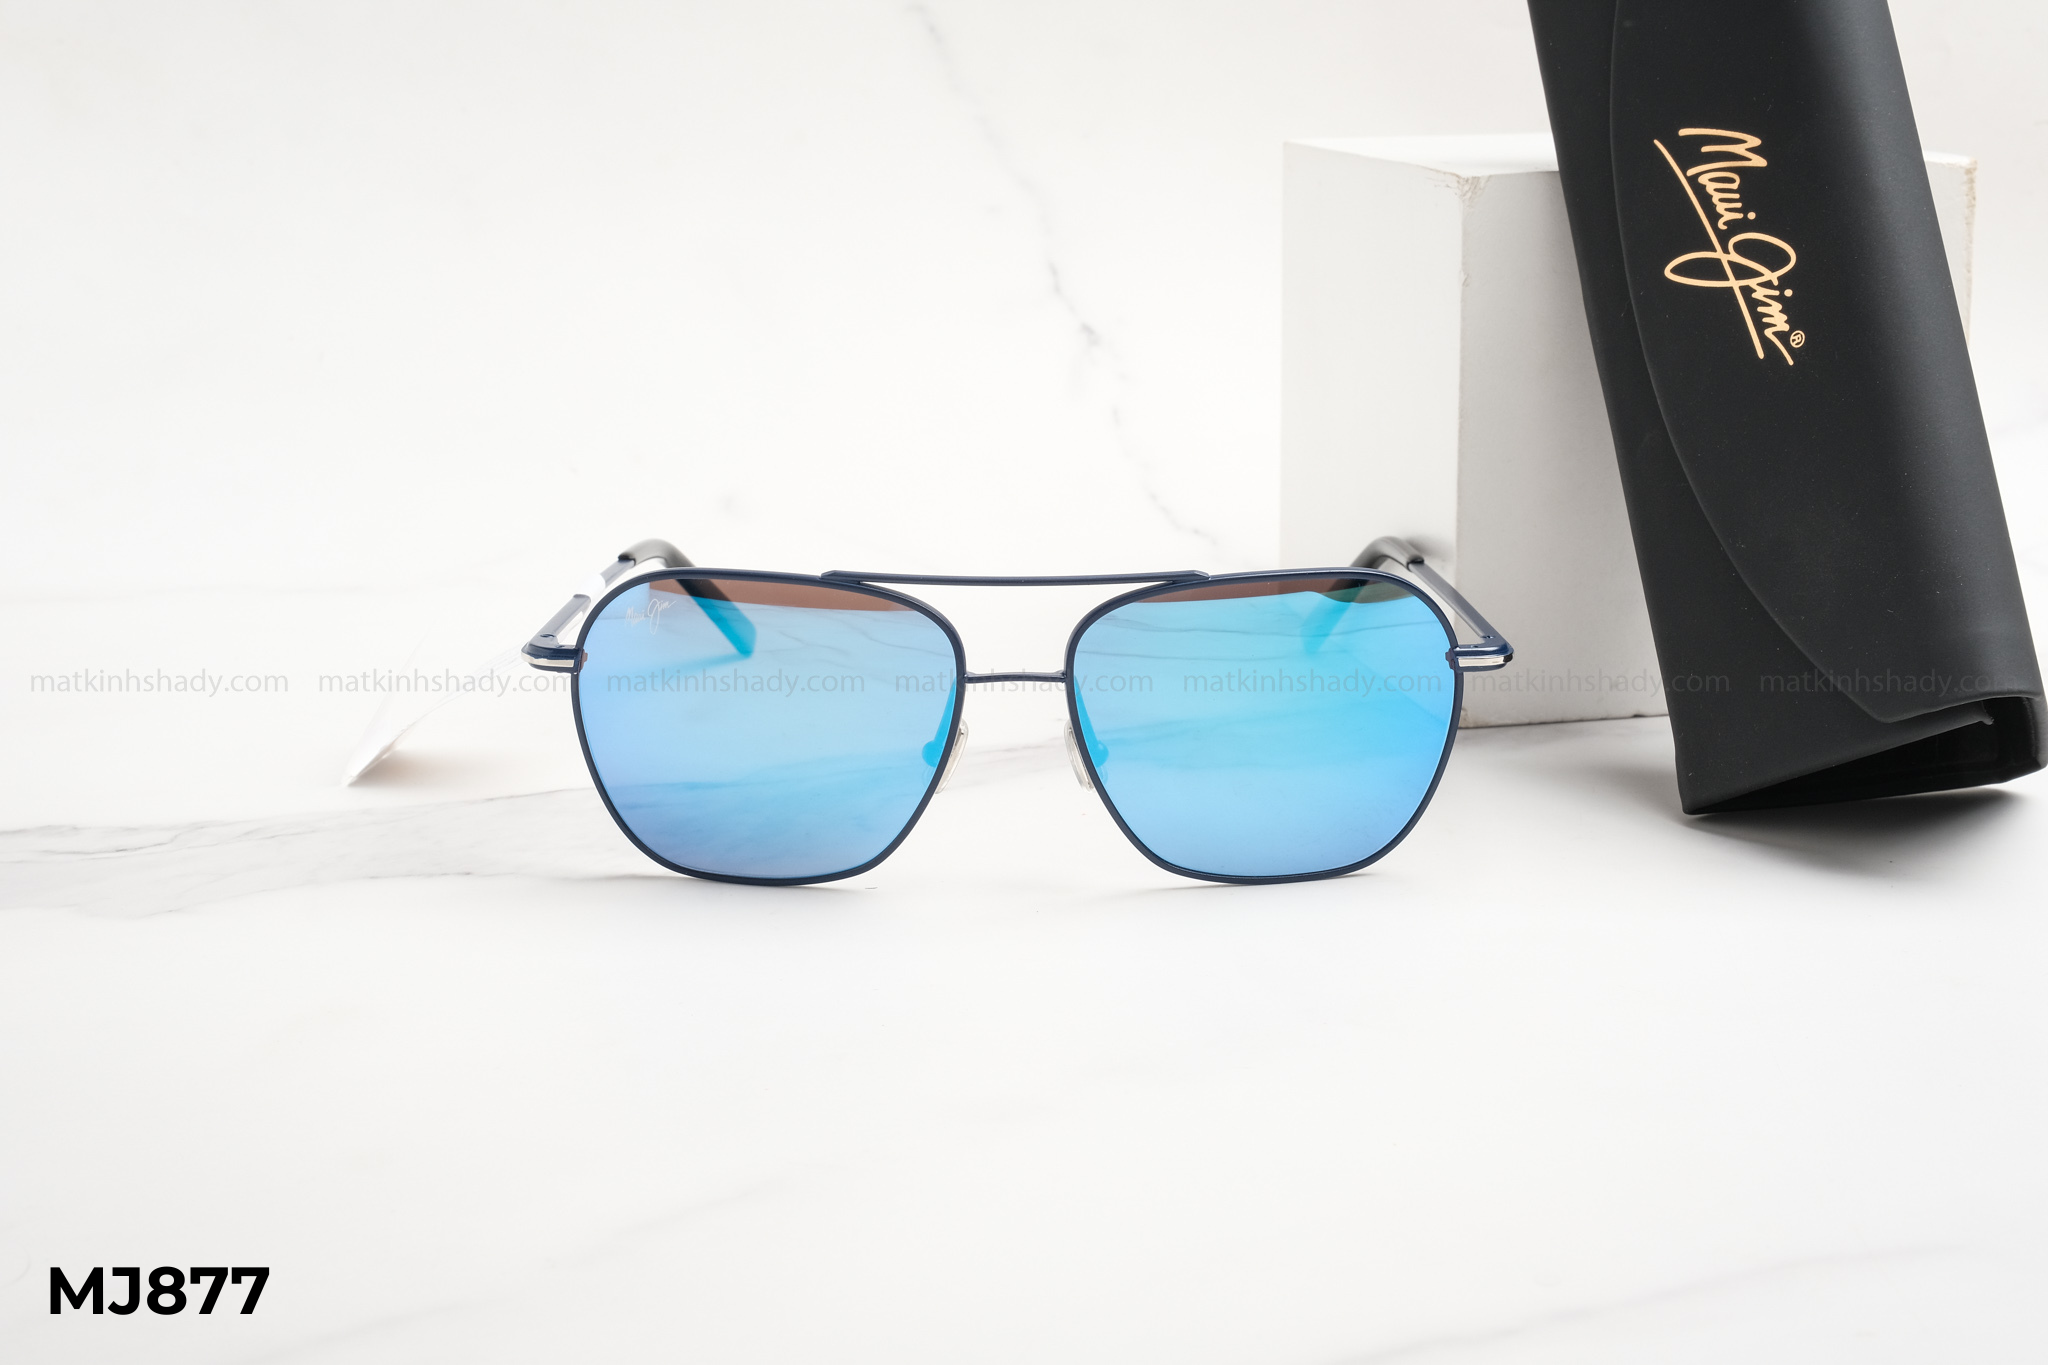  Maui Jim Eyewear - Sunglasses - MJ877 